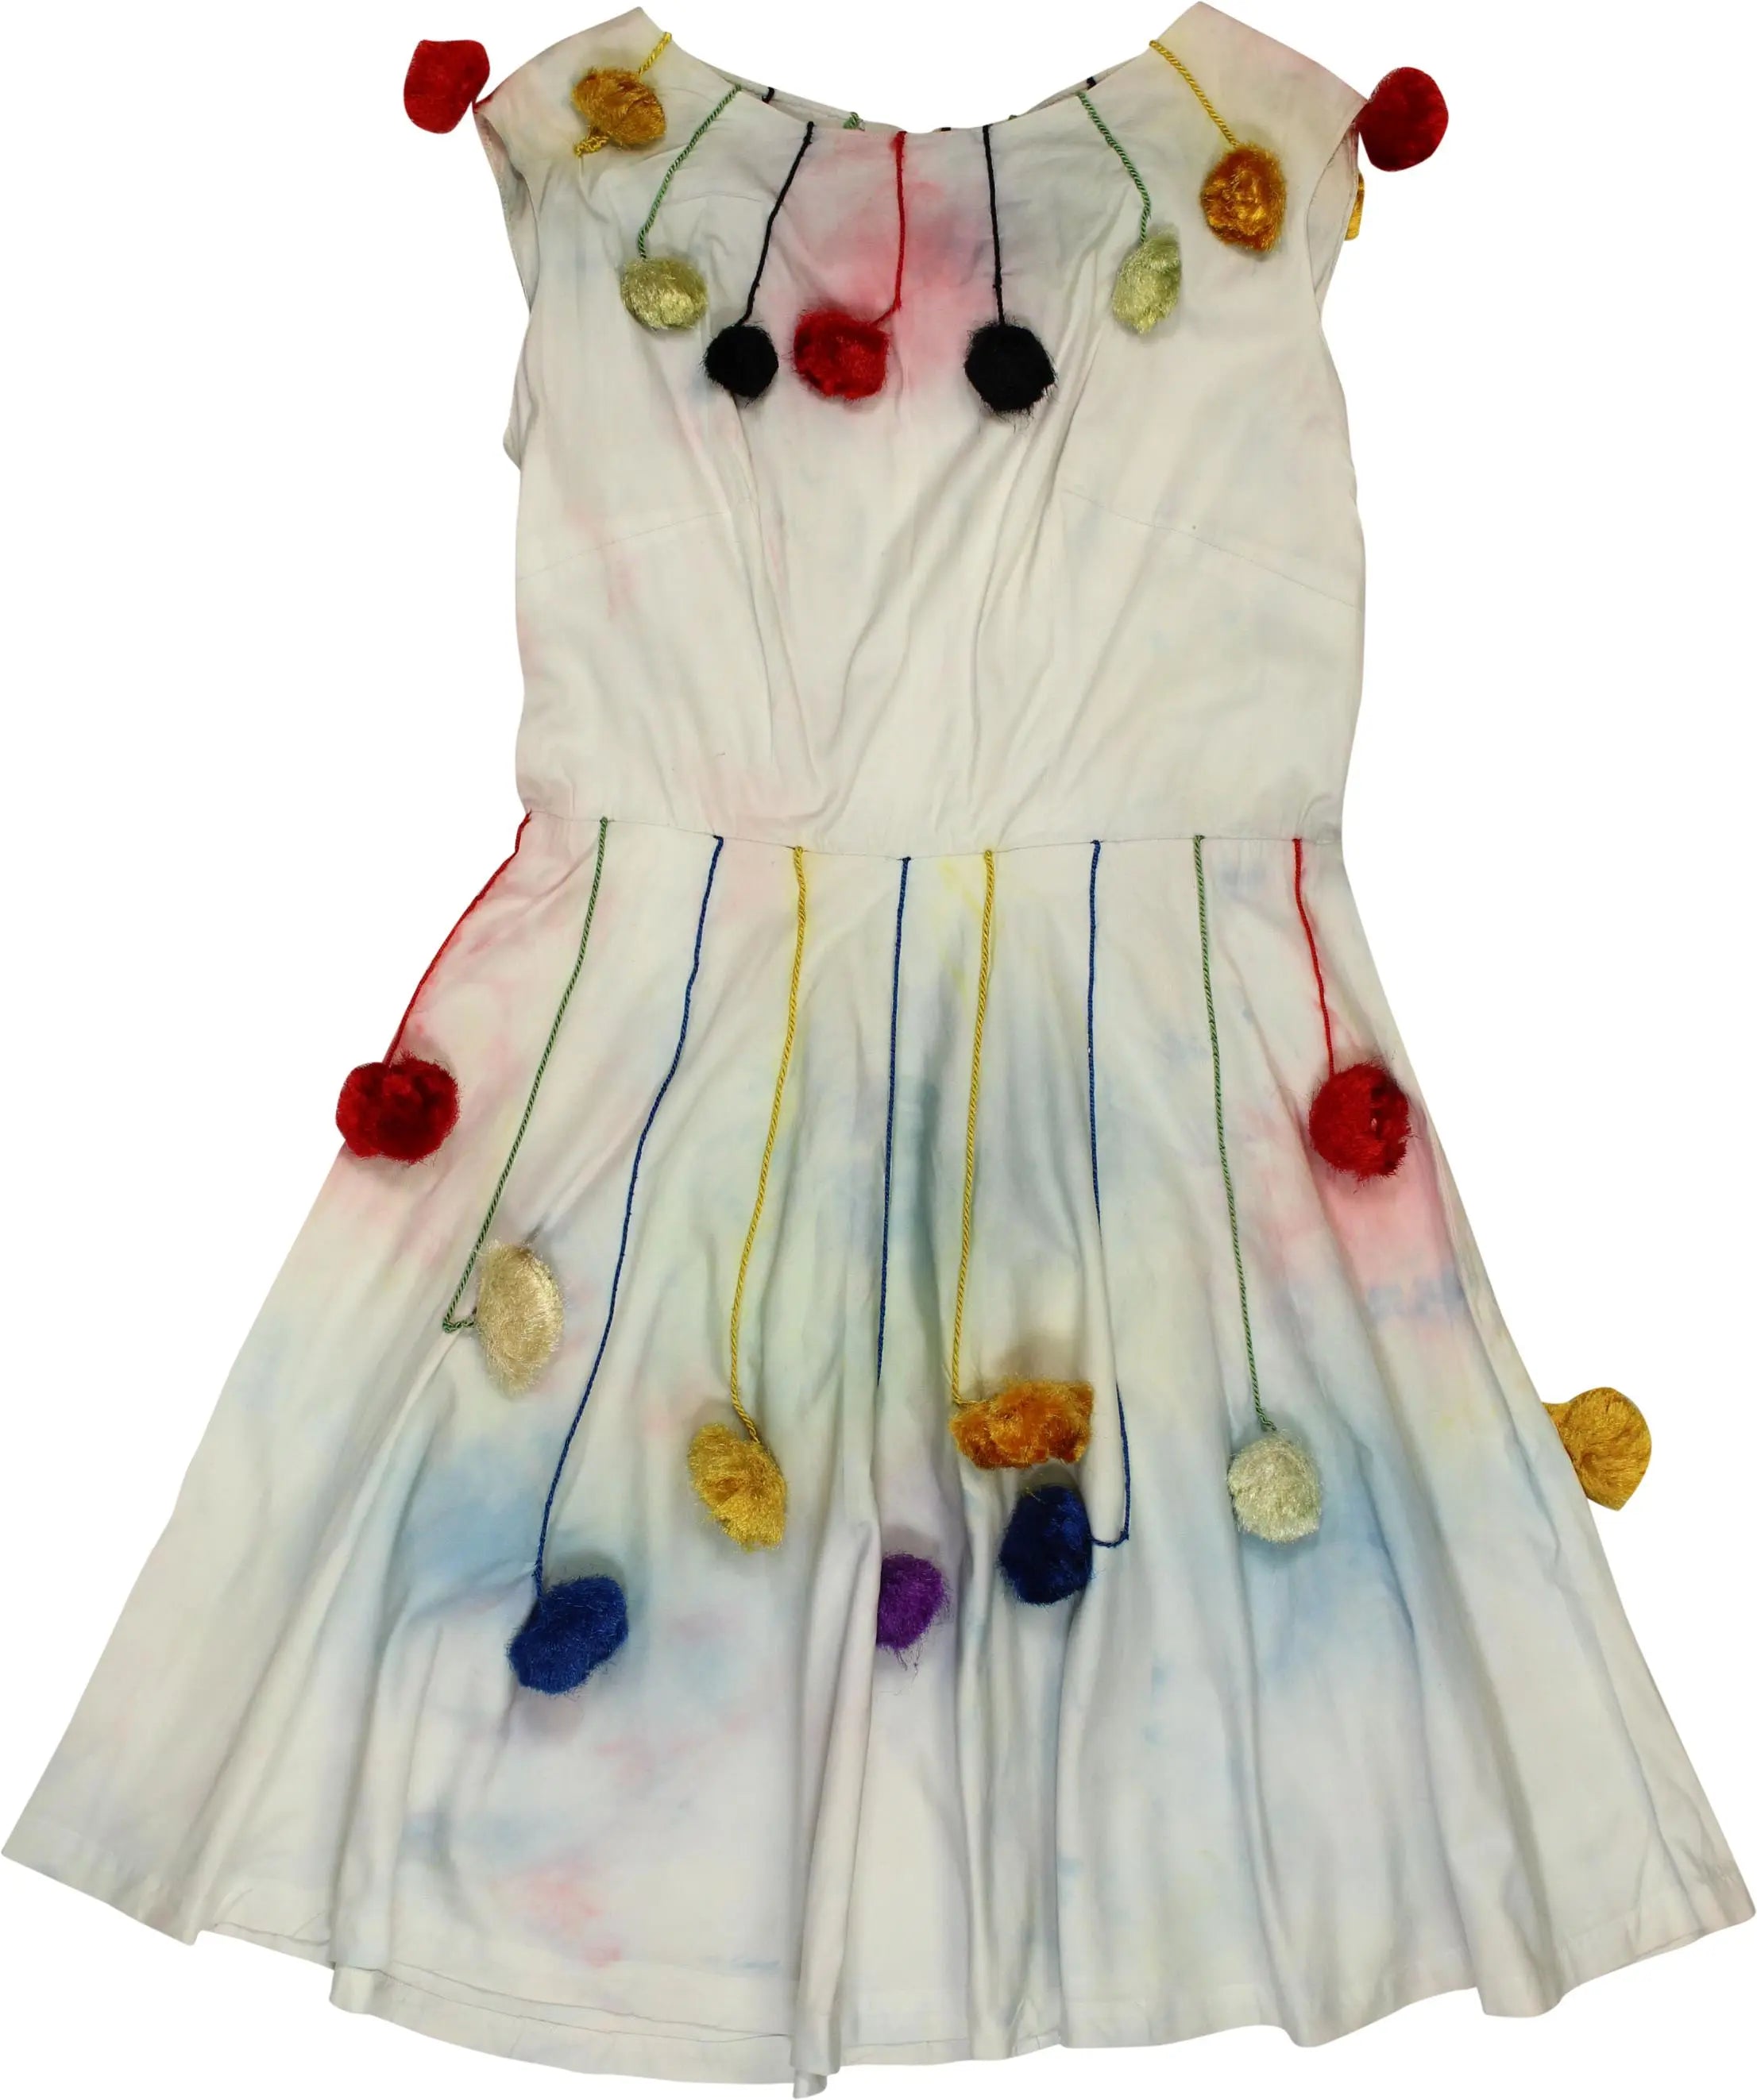 Handmade - Handmade Dress- ThriftTale.com - Vintage and second handclothing